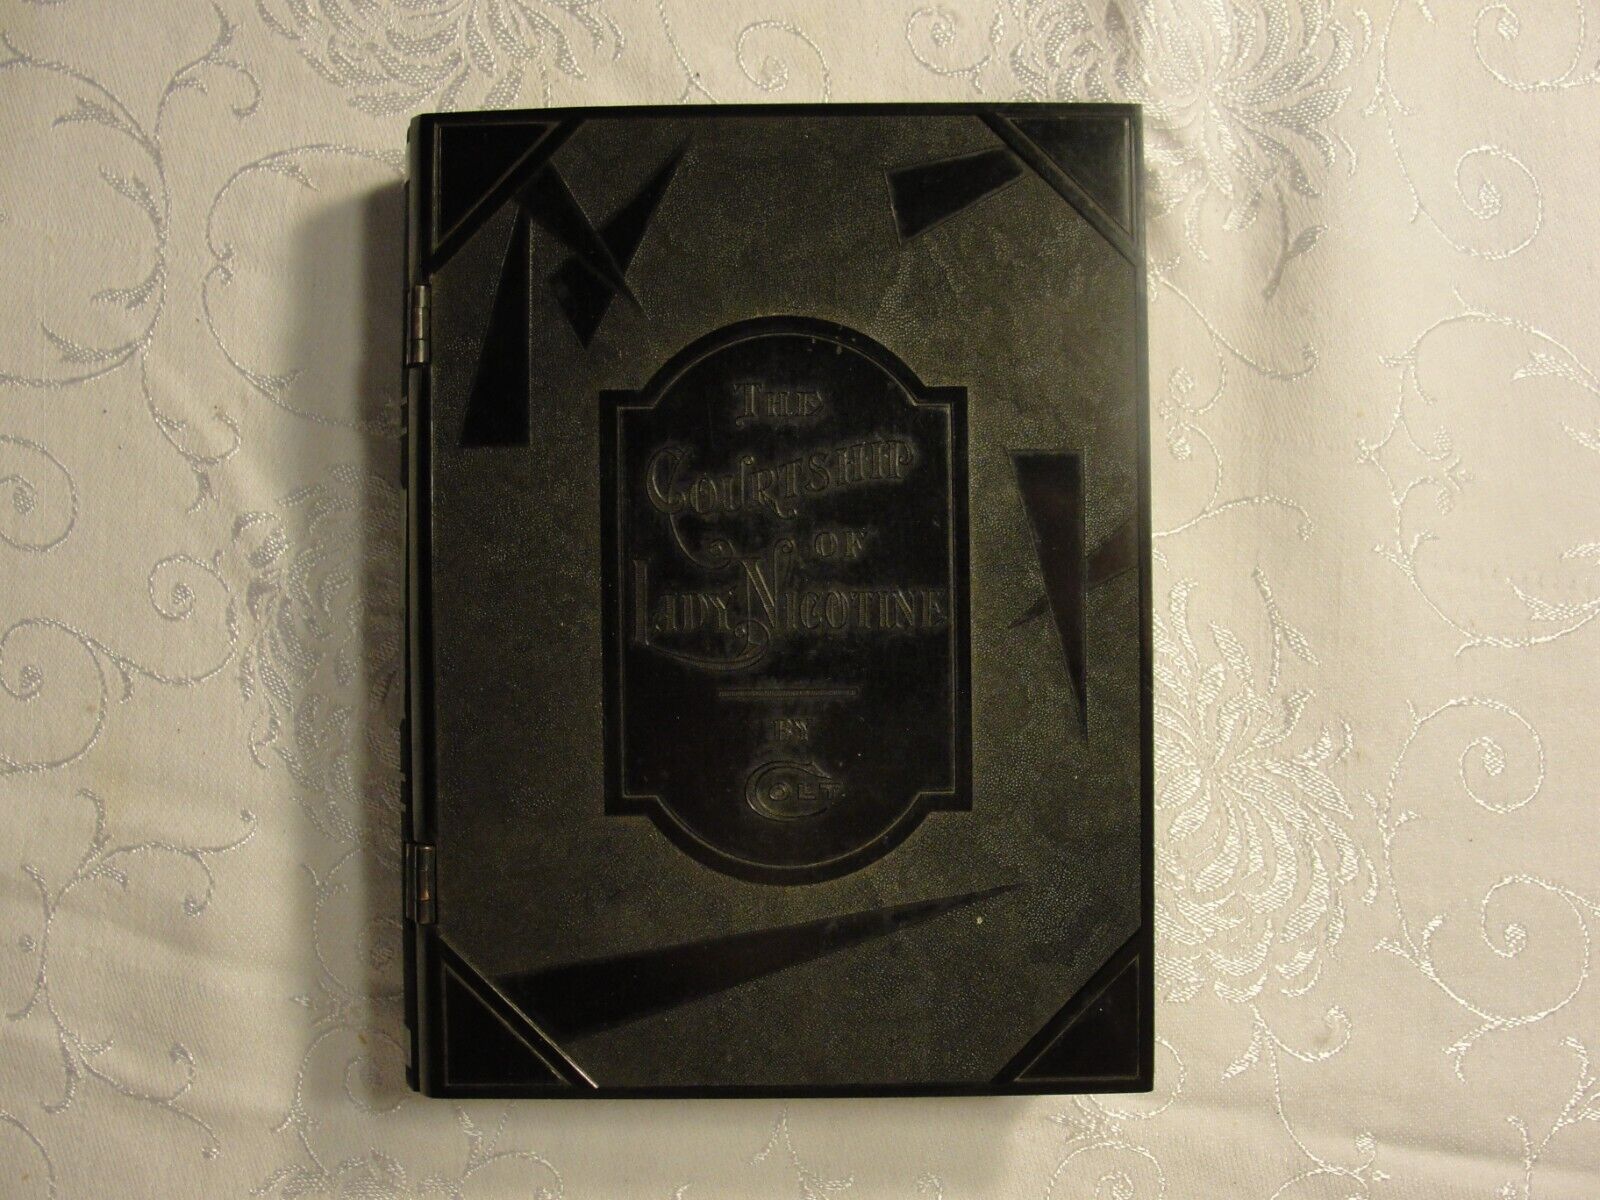 COLT THE COURTSHIP OF LADY NICOTINE COLTROCK CIGARETTE BOX BOOK ART DECO BLACK